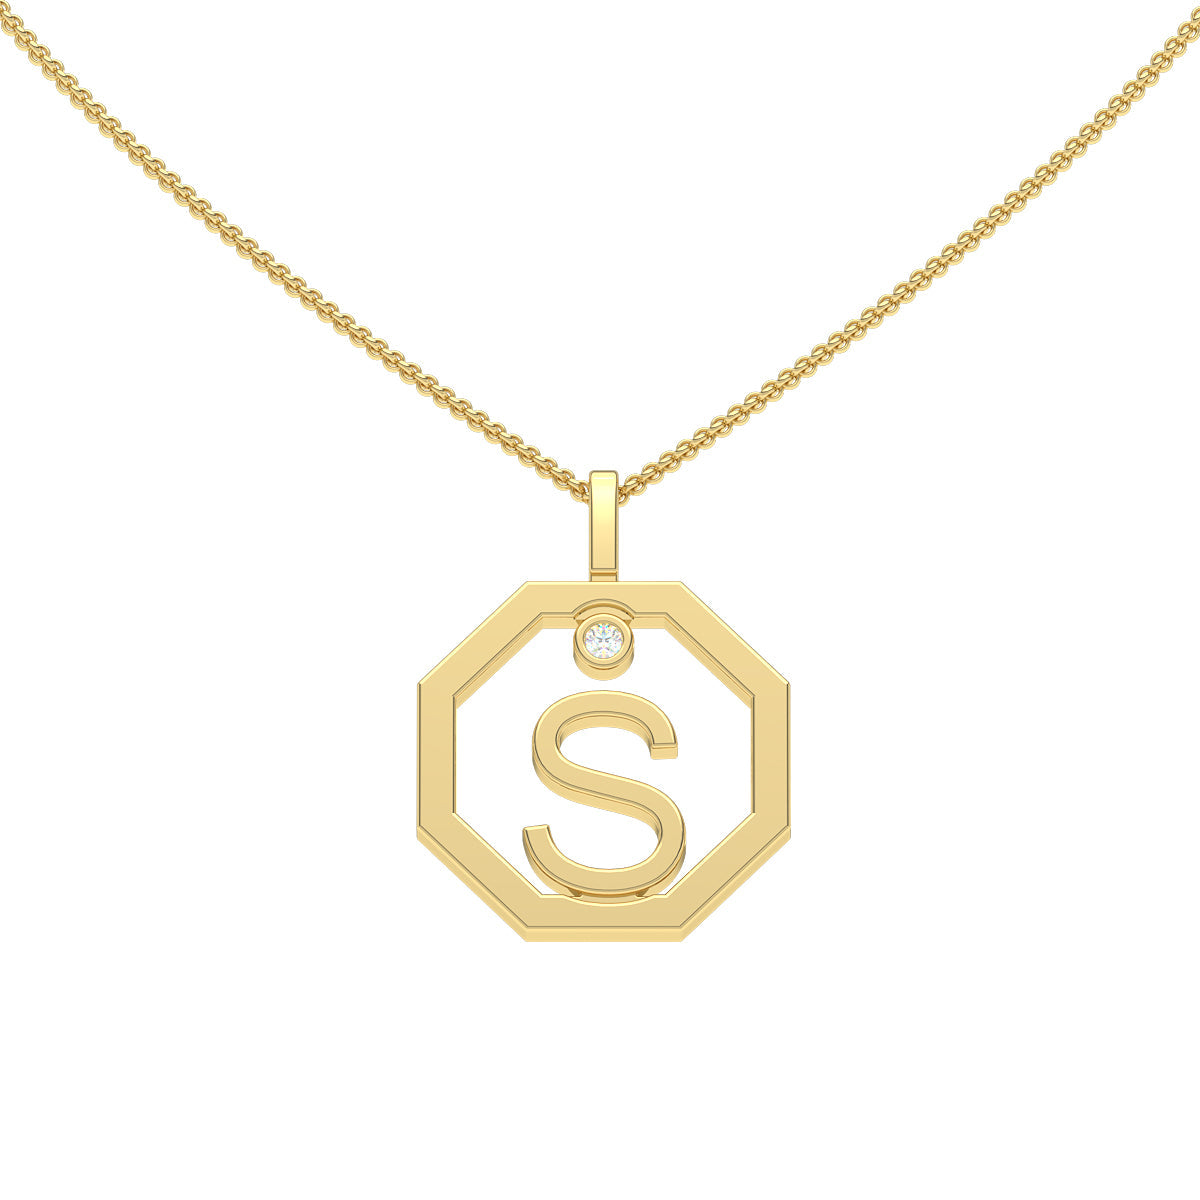 Personalised-Initial-S-diamond-yellow-gold-pendant-Lizunova-Fine-Jewels-Sydney-NSW-Australia